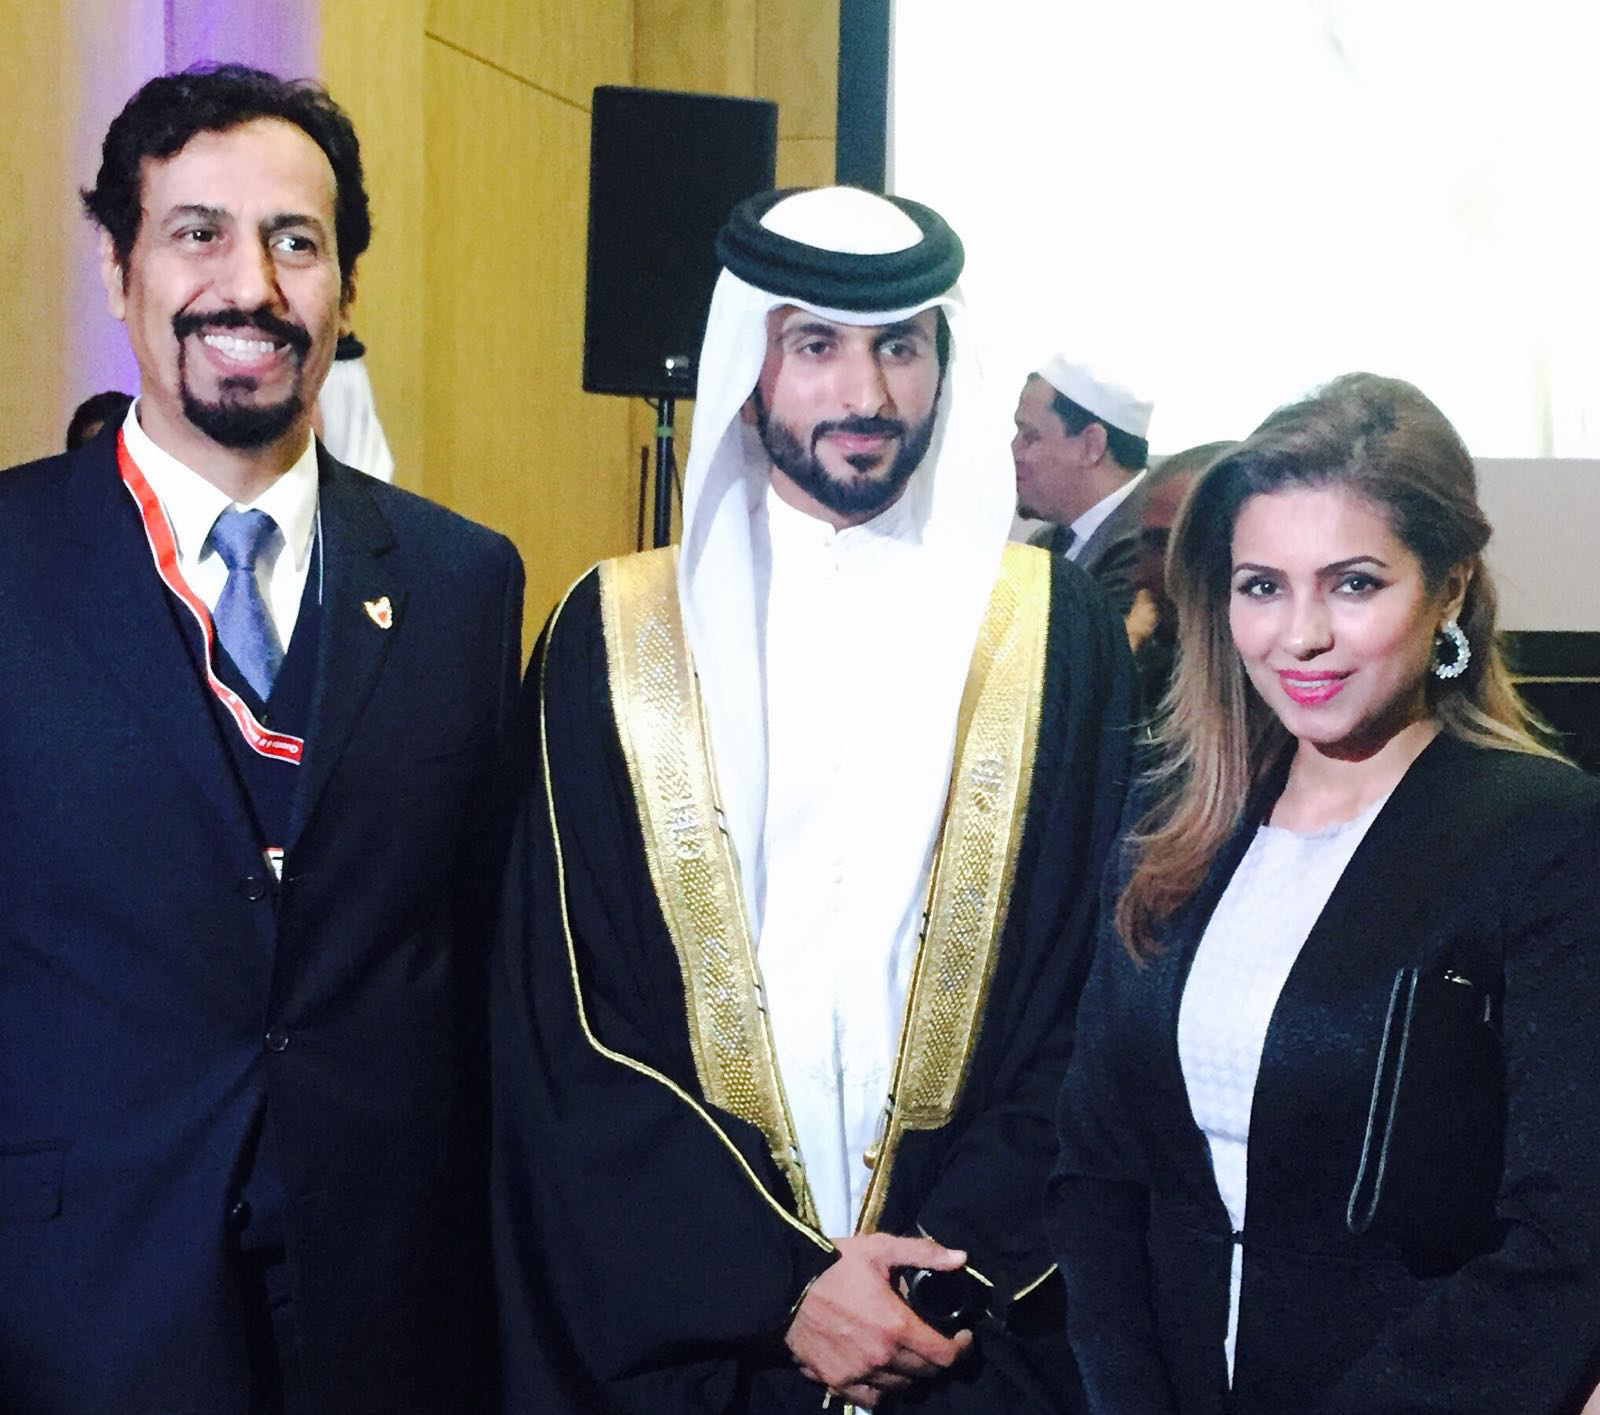 Sheikh Nasser bin Hamad Al Khalifa with Ambassador Sheikh Ali Khaled Al-Jaber Al-Sabah